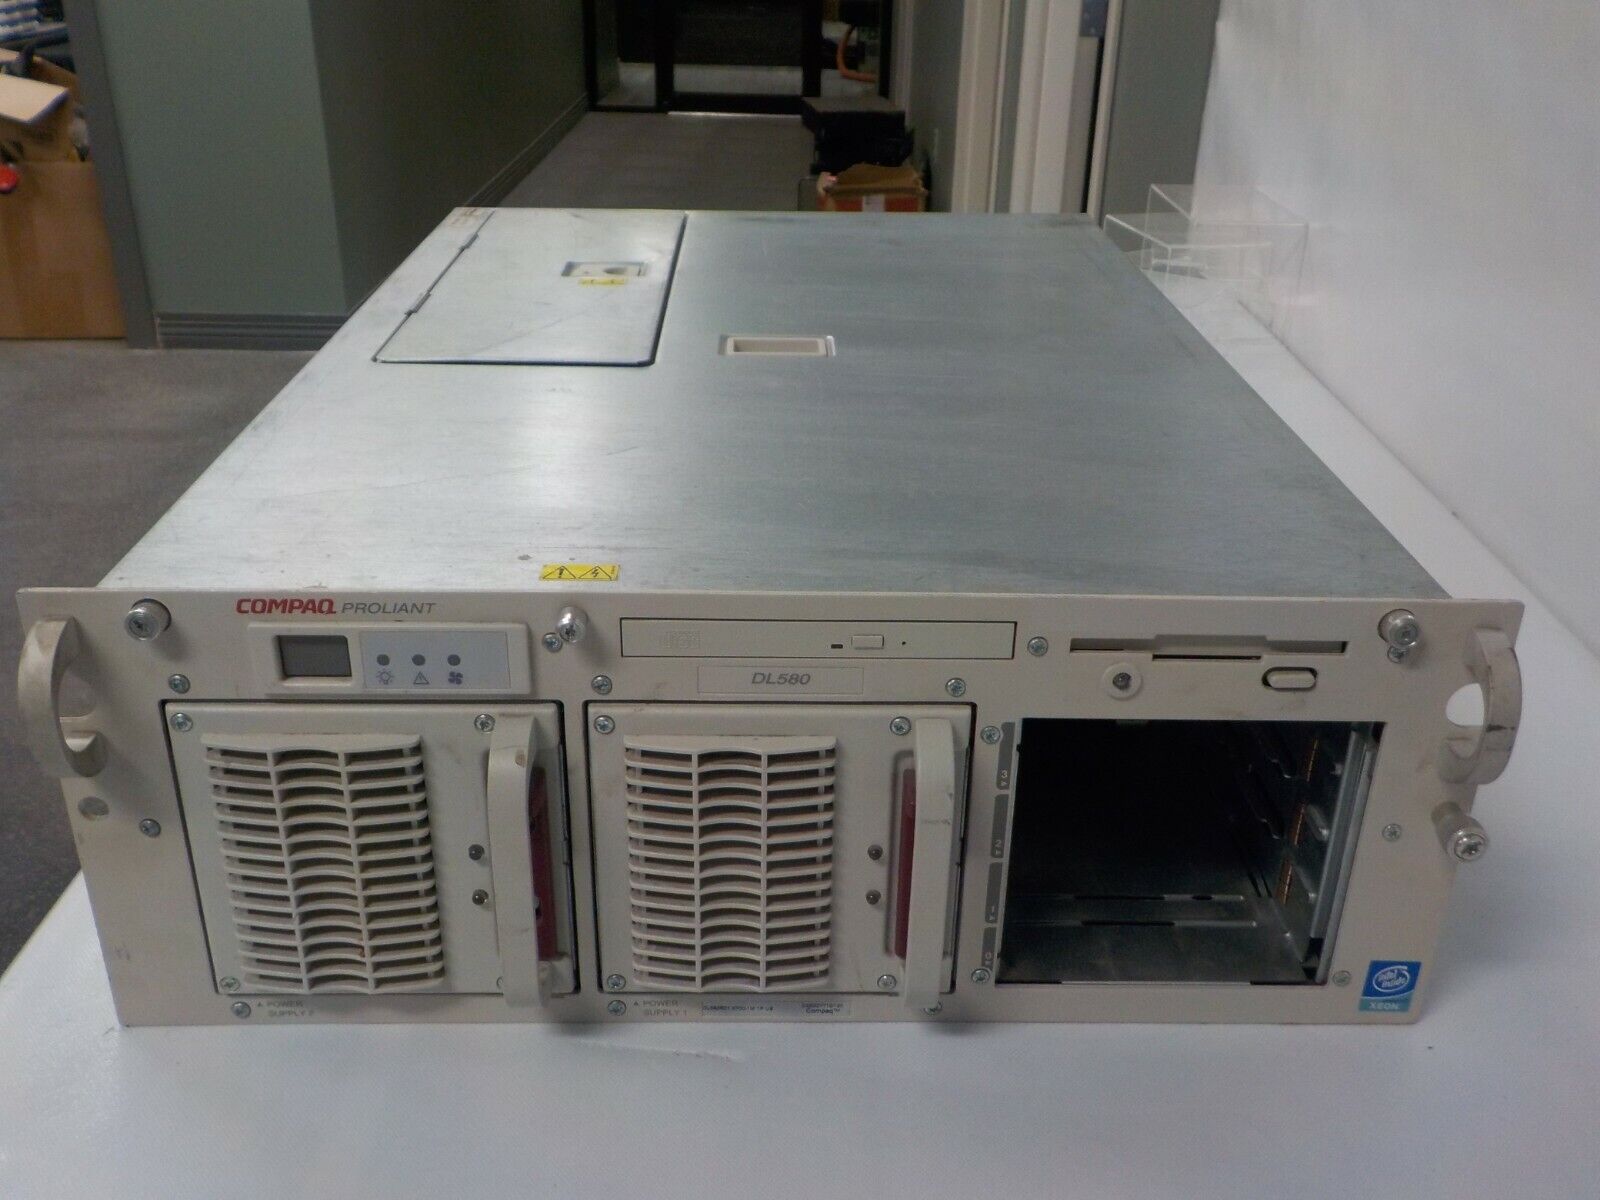 Compaq ProLiant DL580 R01 x700 Server 4x Pentium Xeon III 700MHz 4GB RAM No HDD